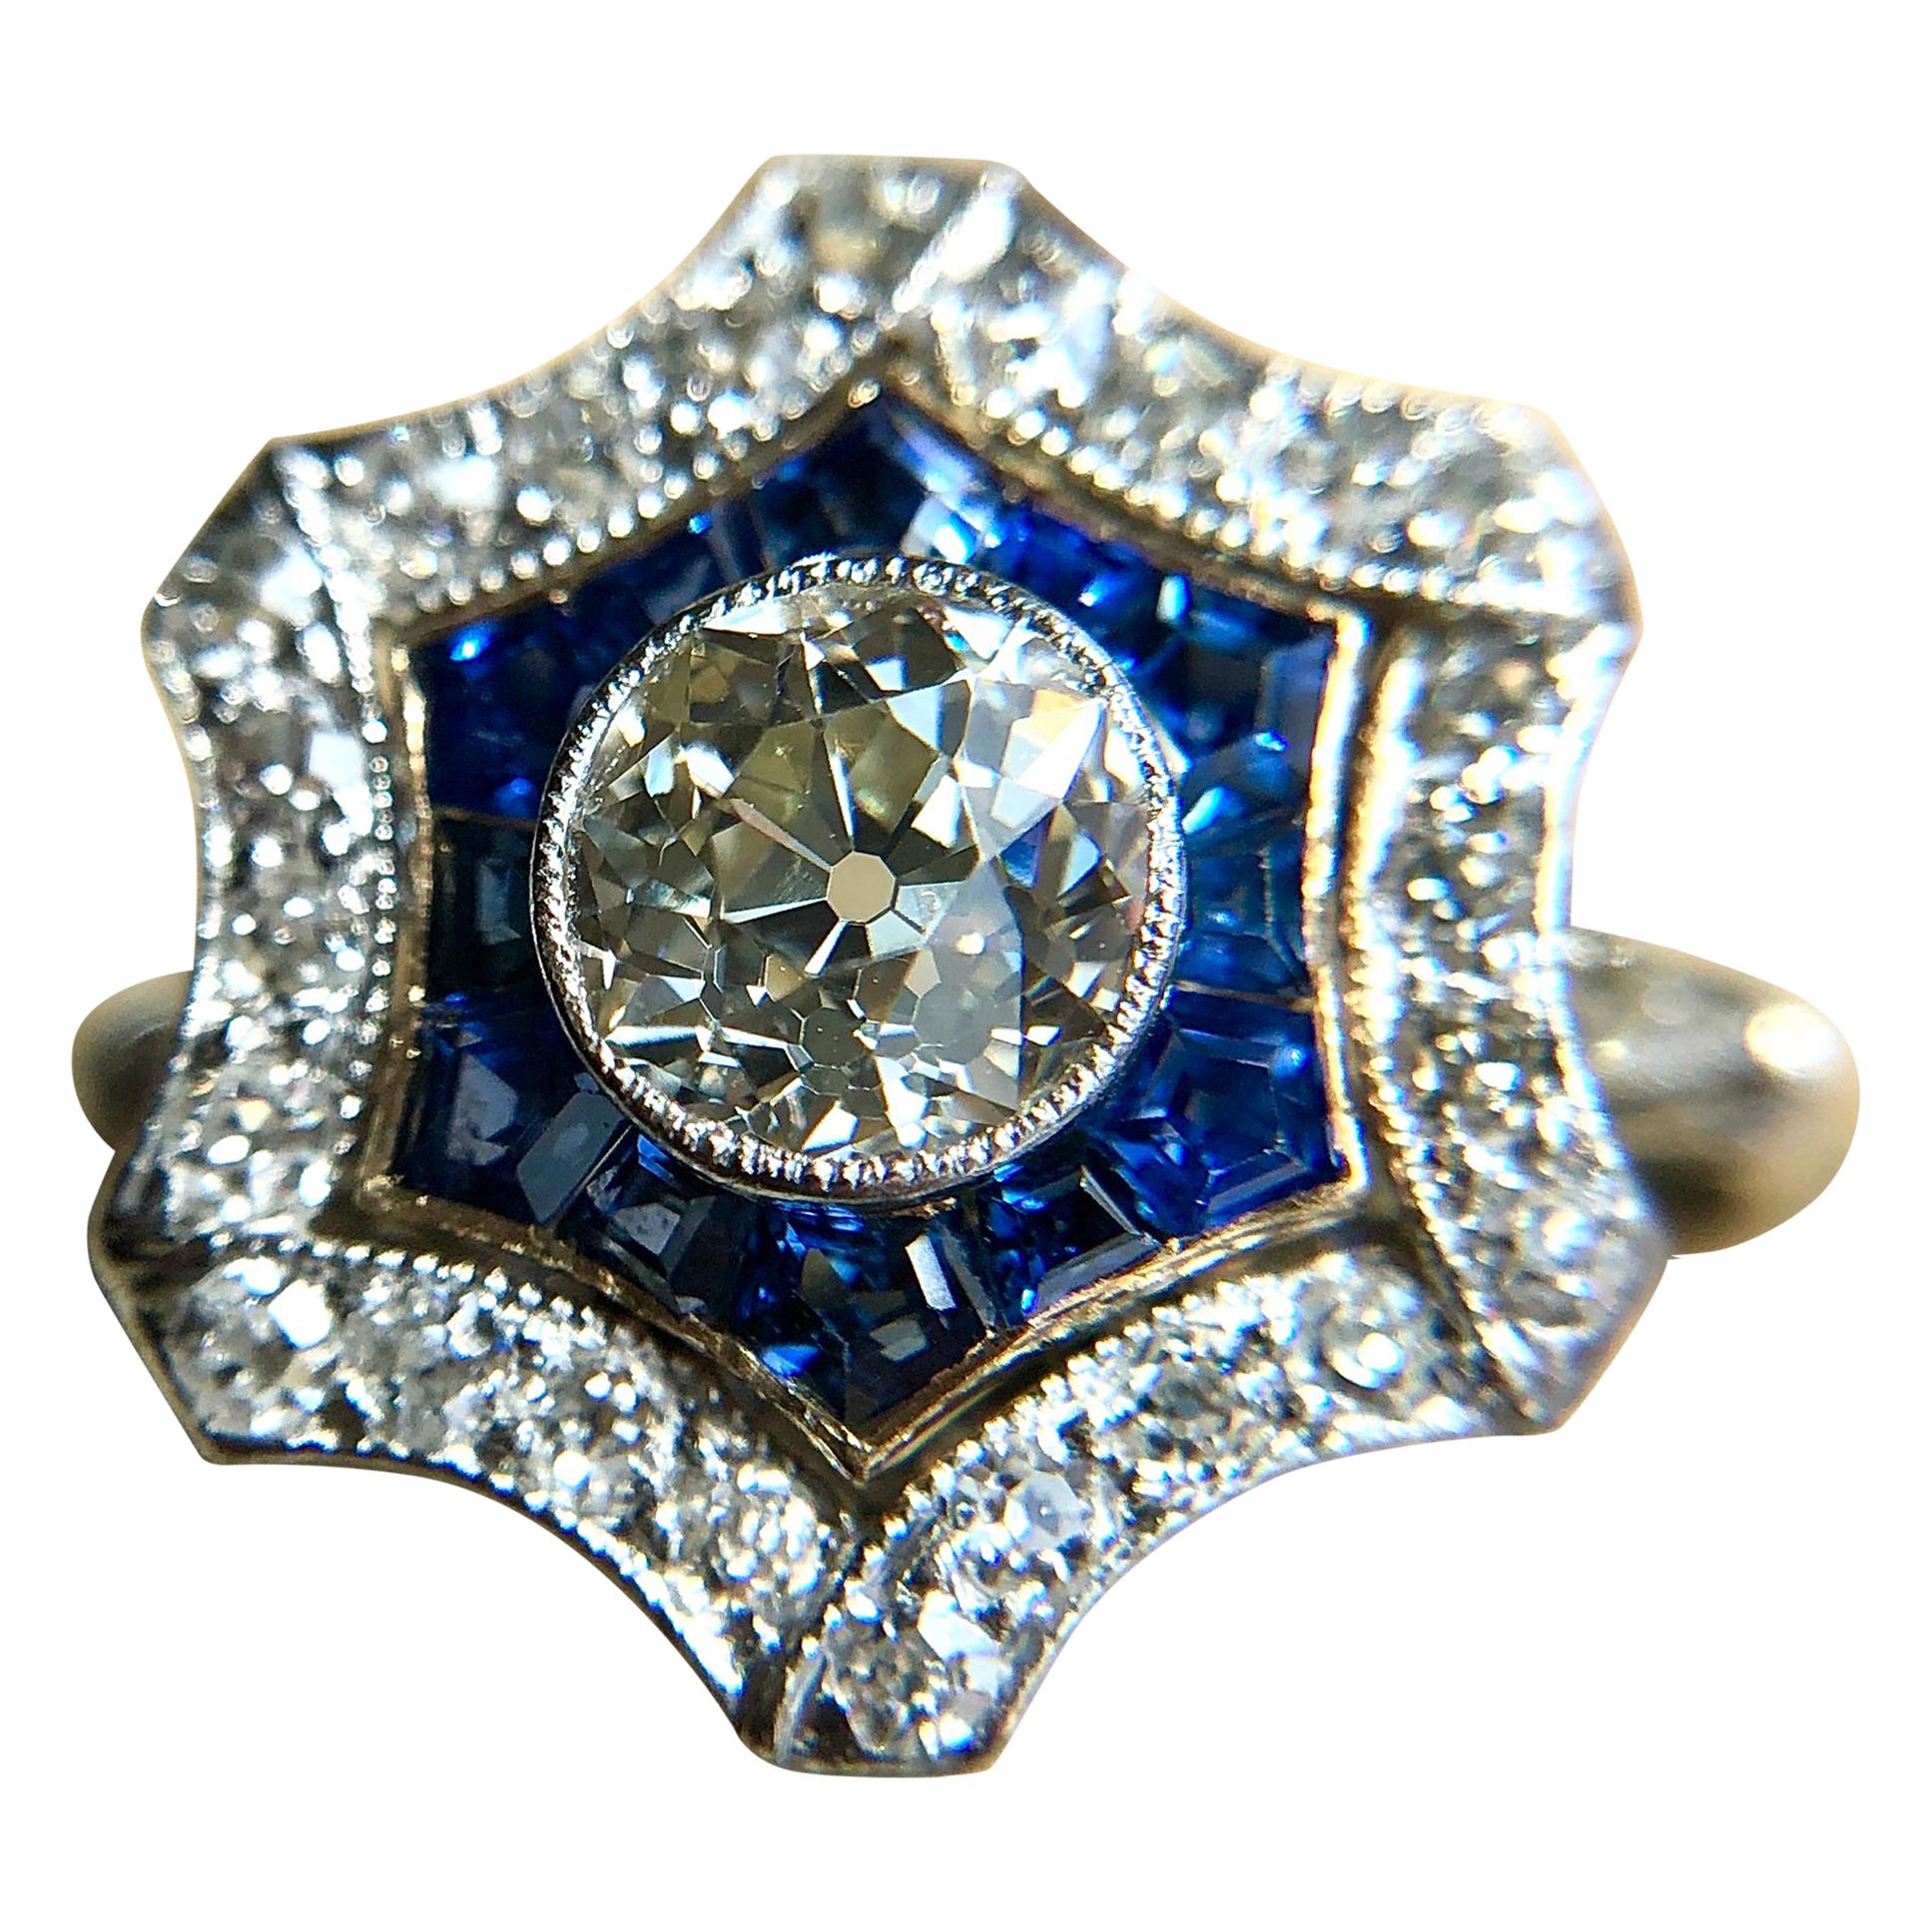 Art Deco Platinum Diamond and Sapphire Cluster Ring